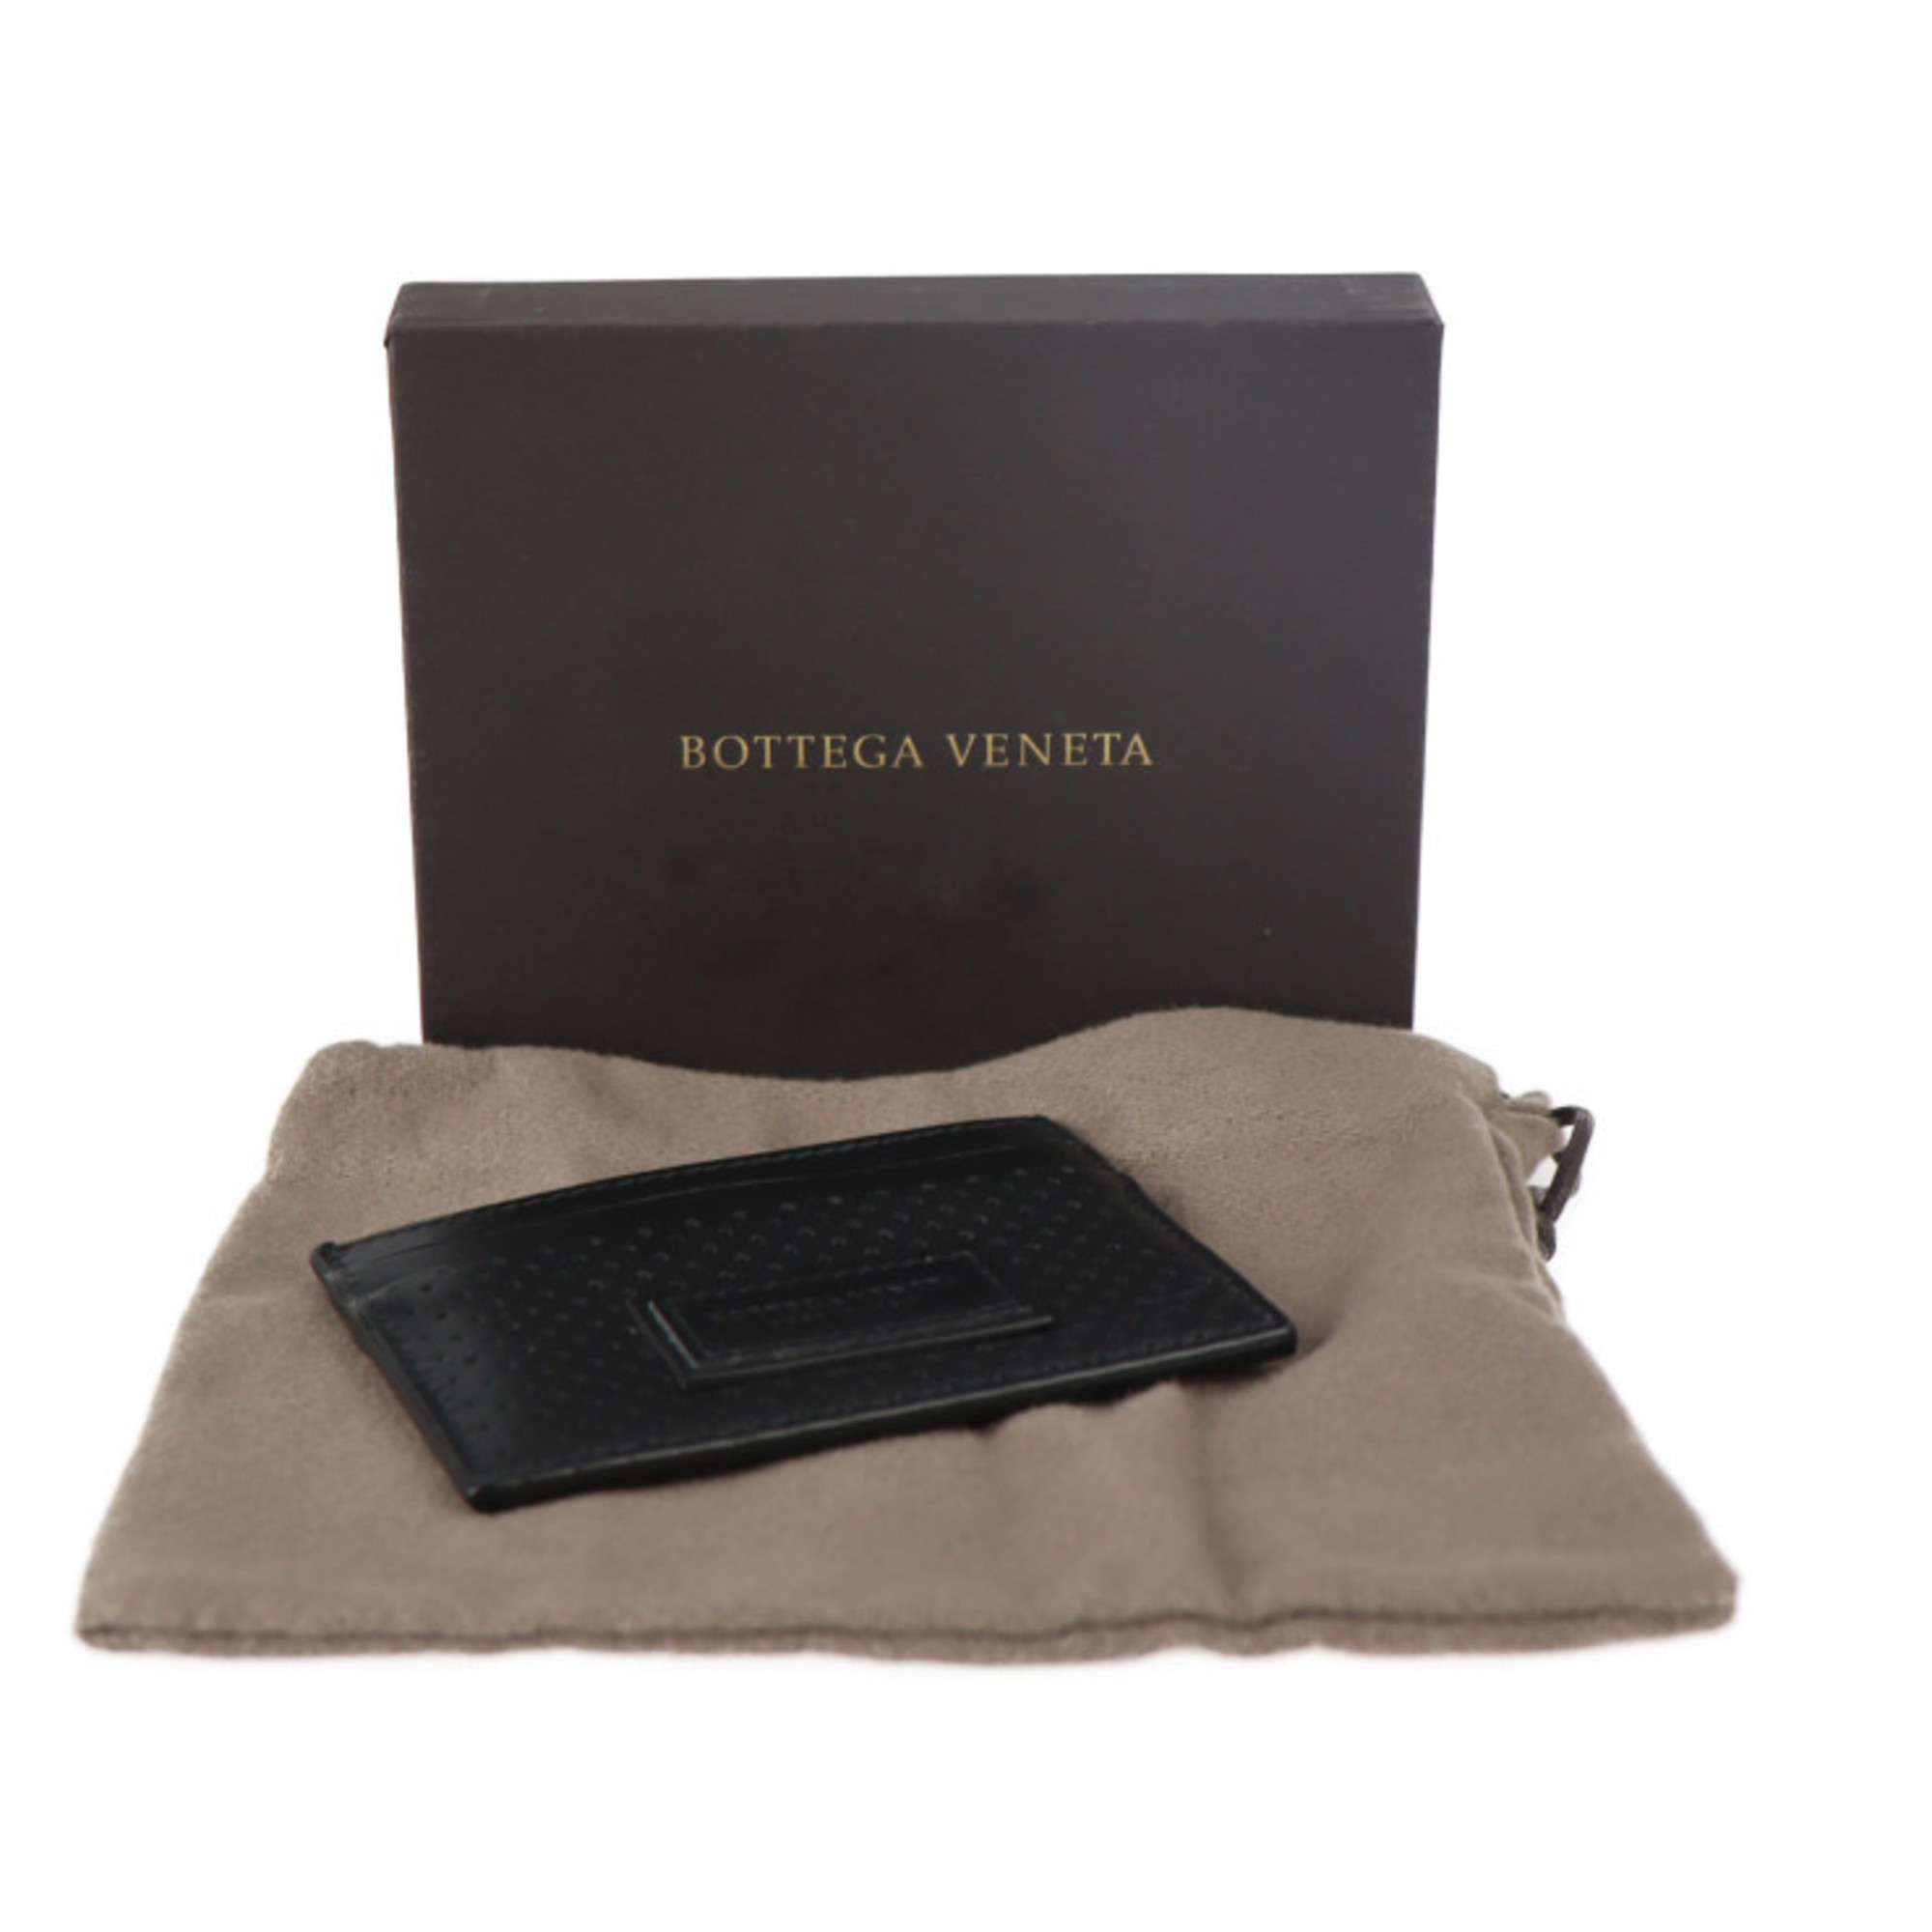 BOTTEGA VENETA Bottega Veneta card case 551811 leather black punching